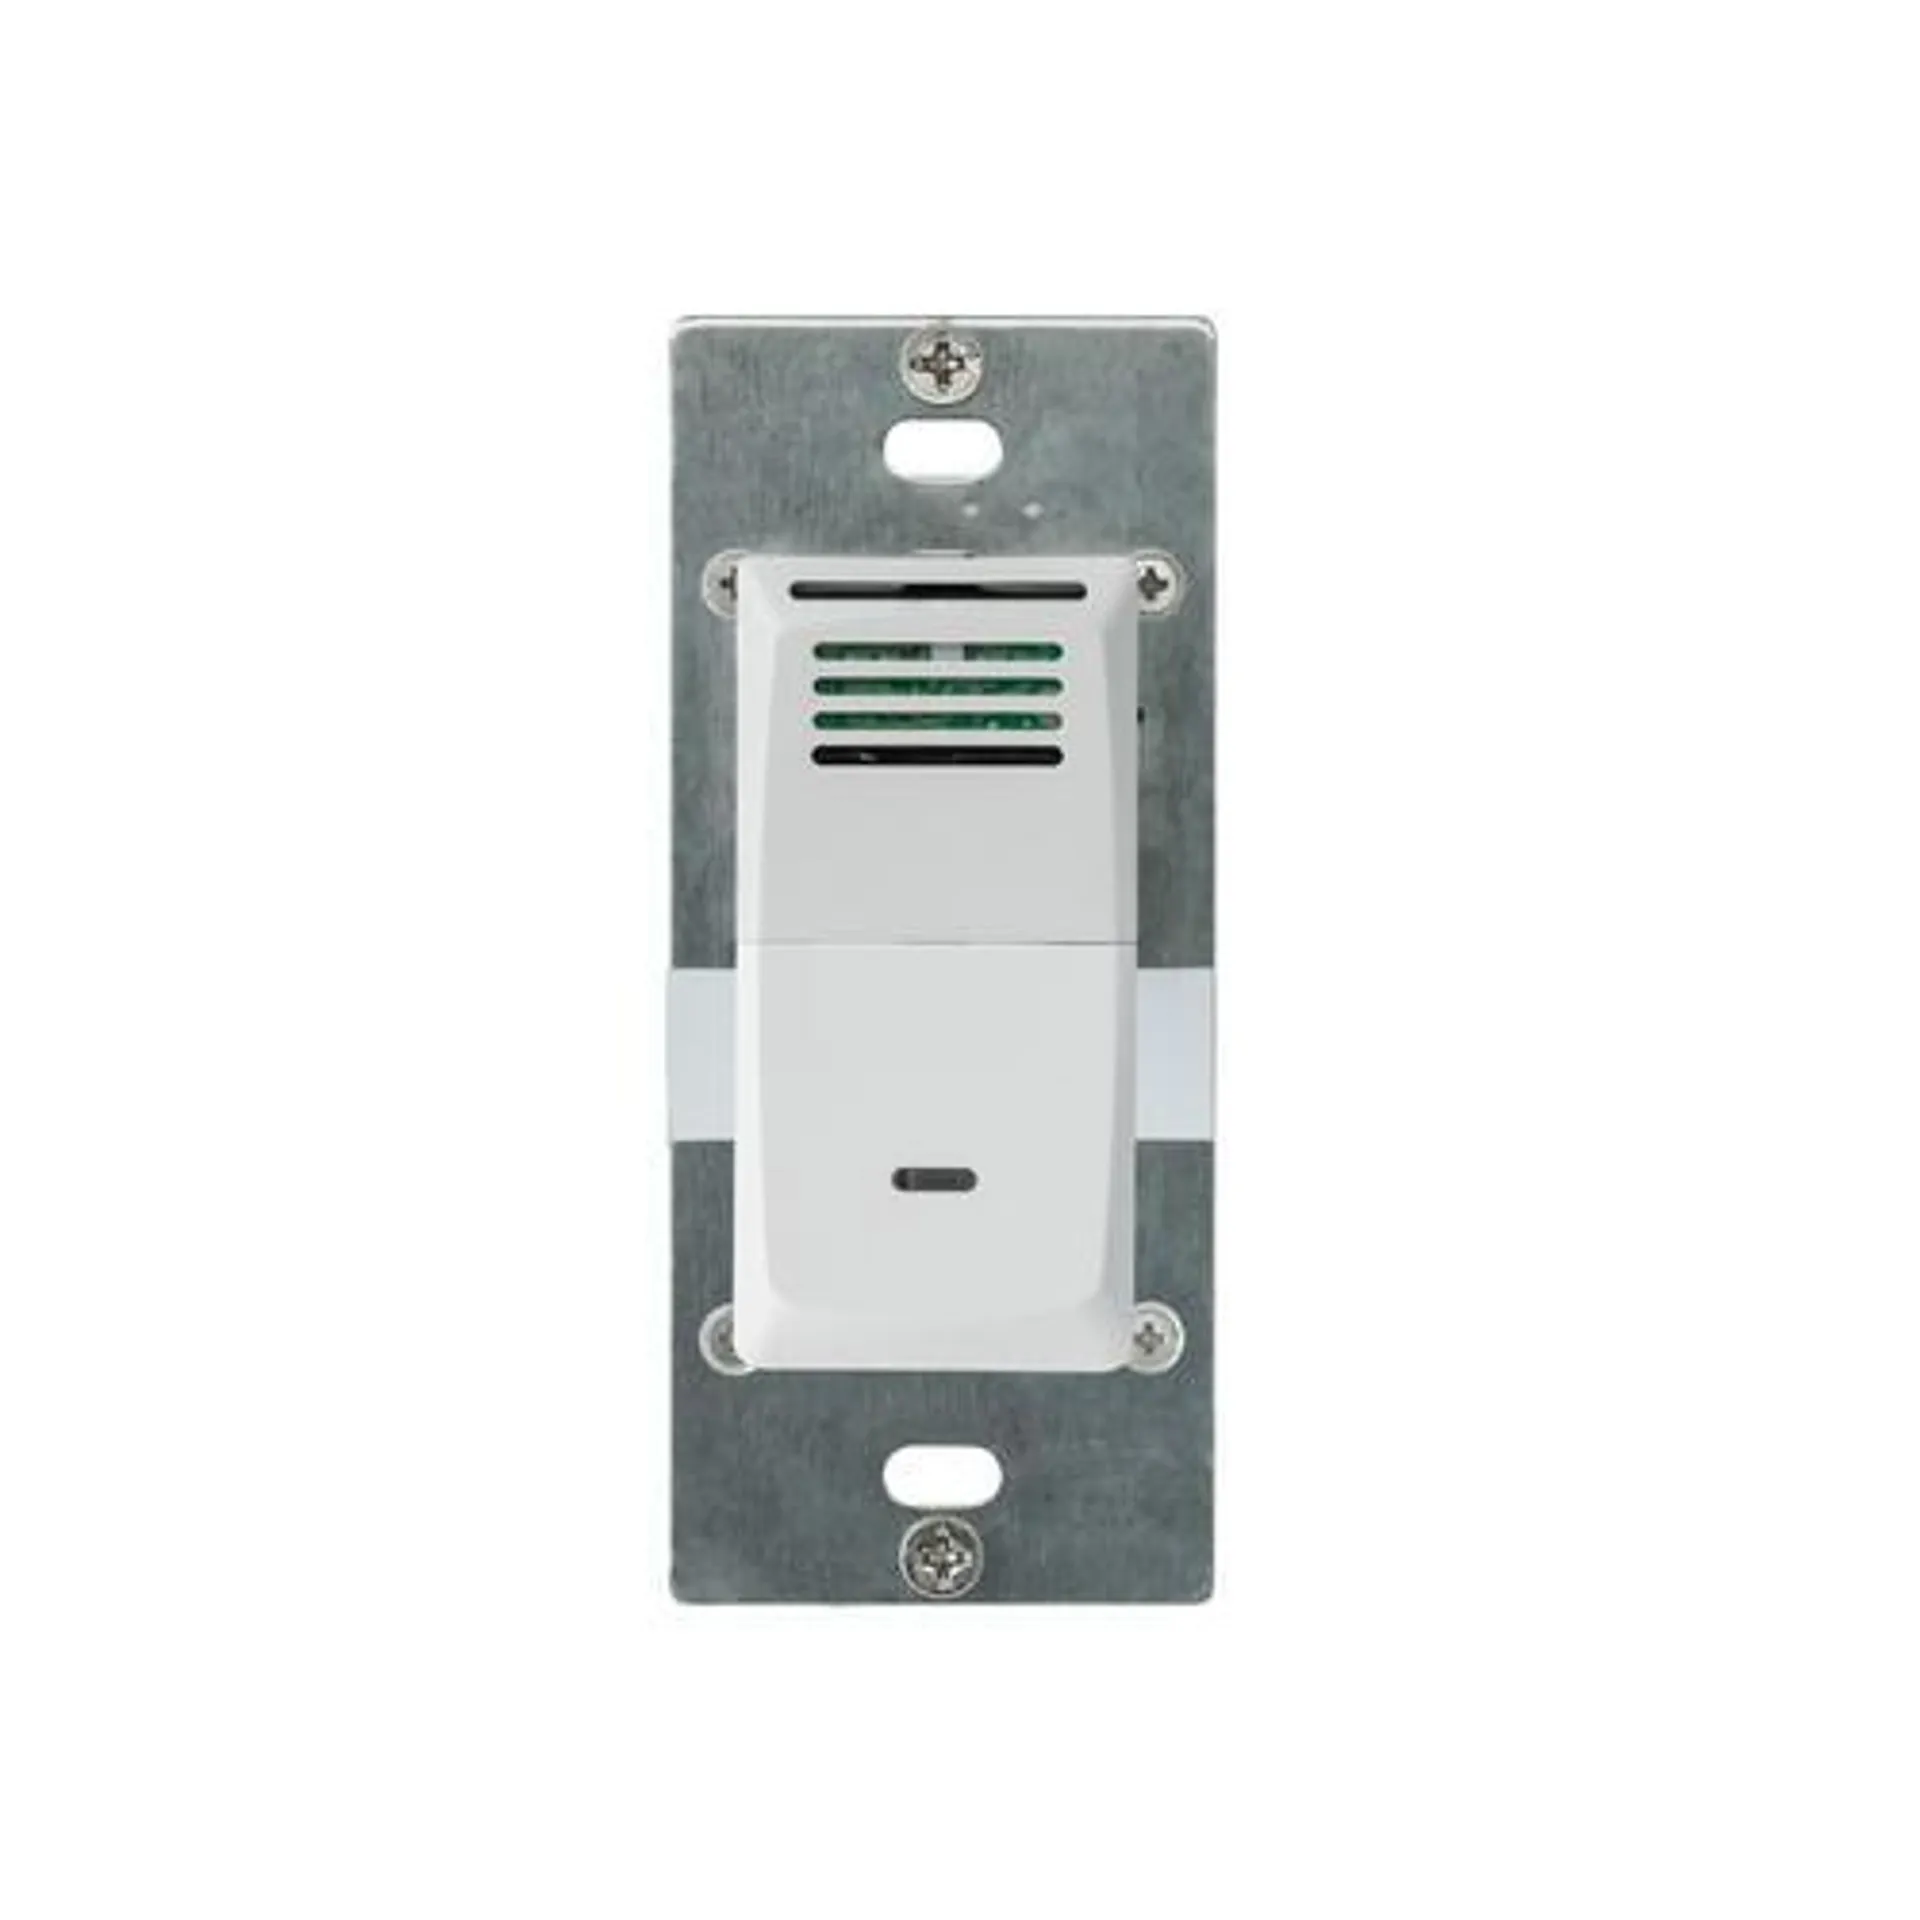 Broan-NuTone® Sensaire® Bath Exhaust Fan Humidity Sensing Wall Control Switch